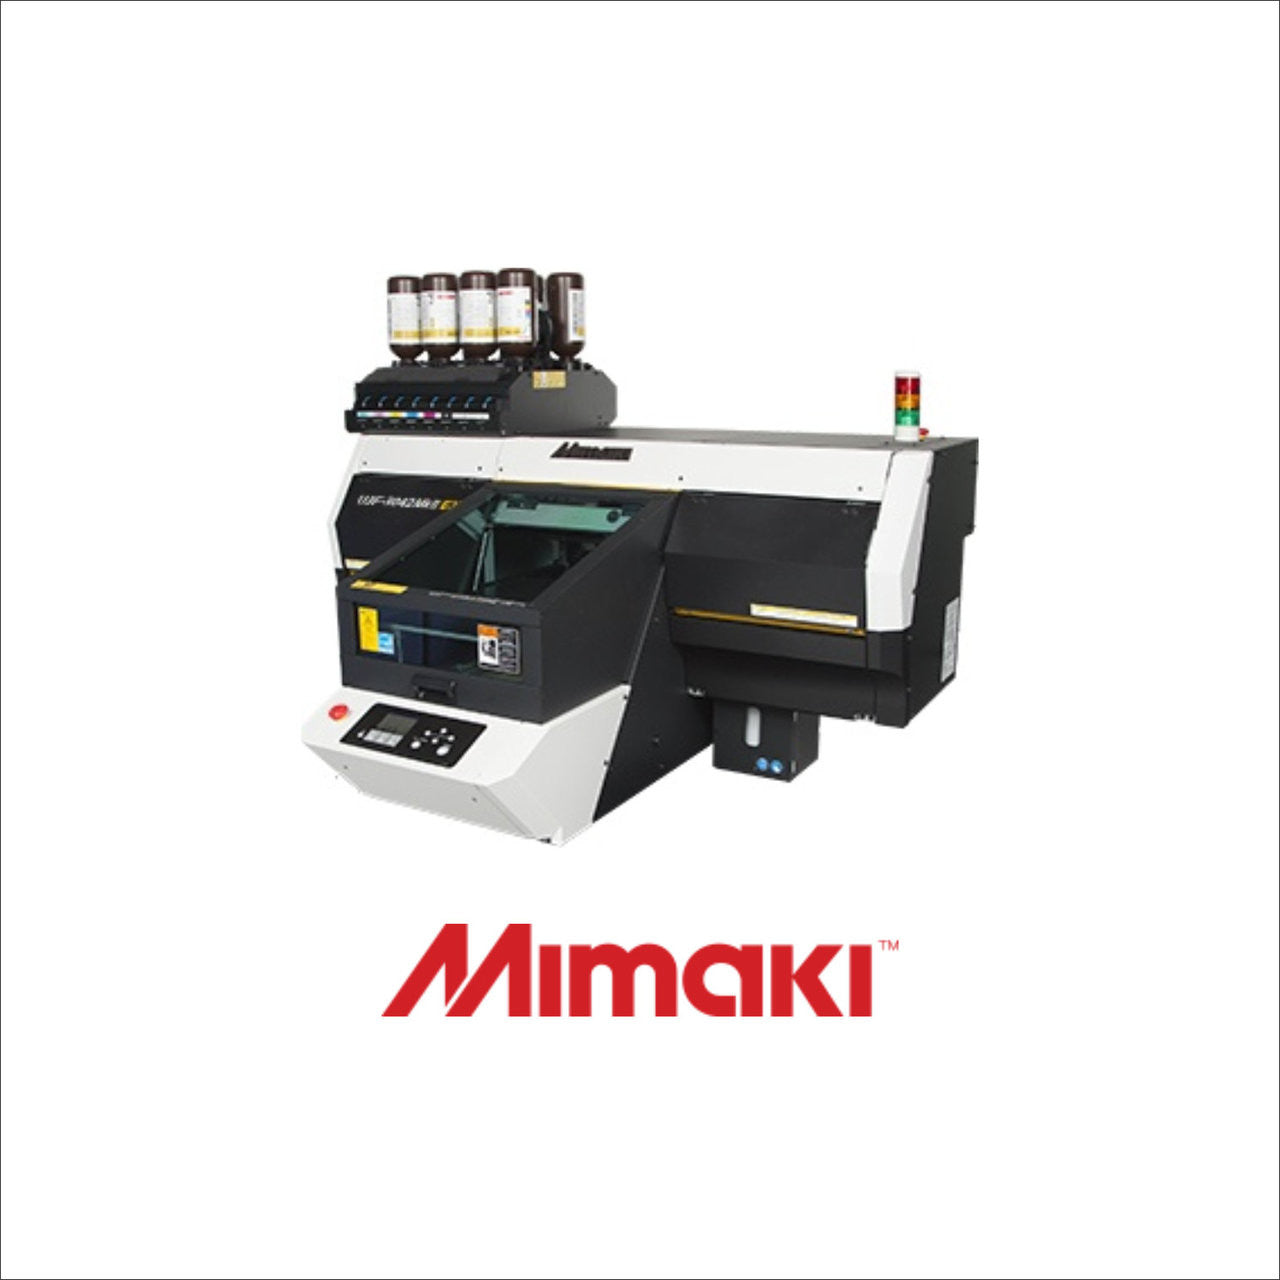 Mimaki UJF-3042 MkII Series